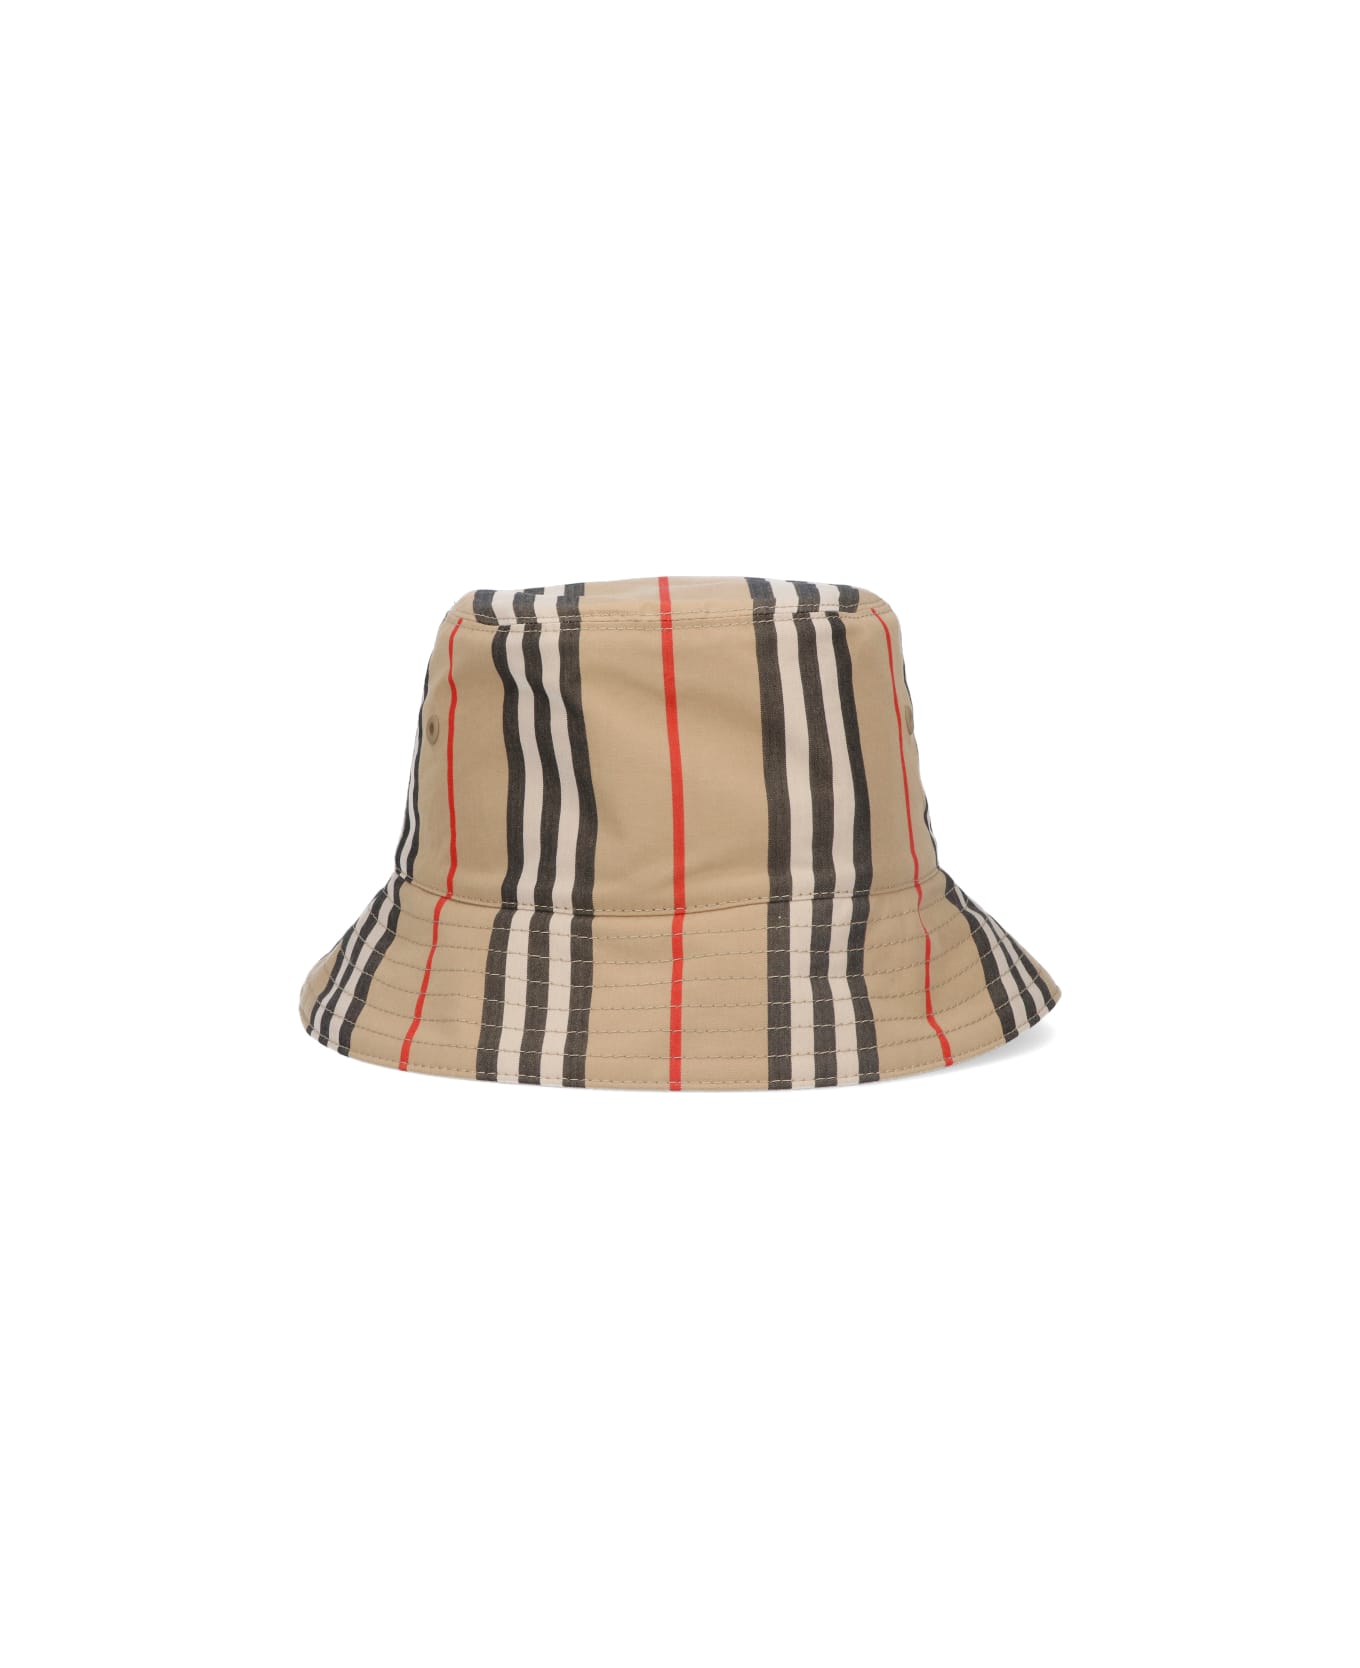 Burberry Vintage Check Cotton Bucket Hat - Beige